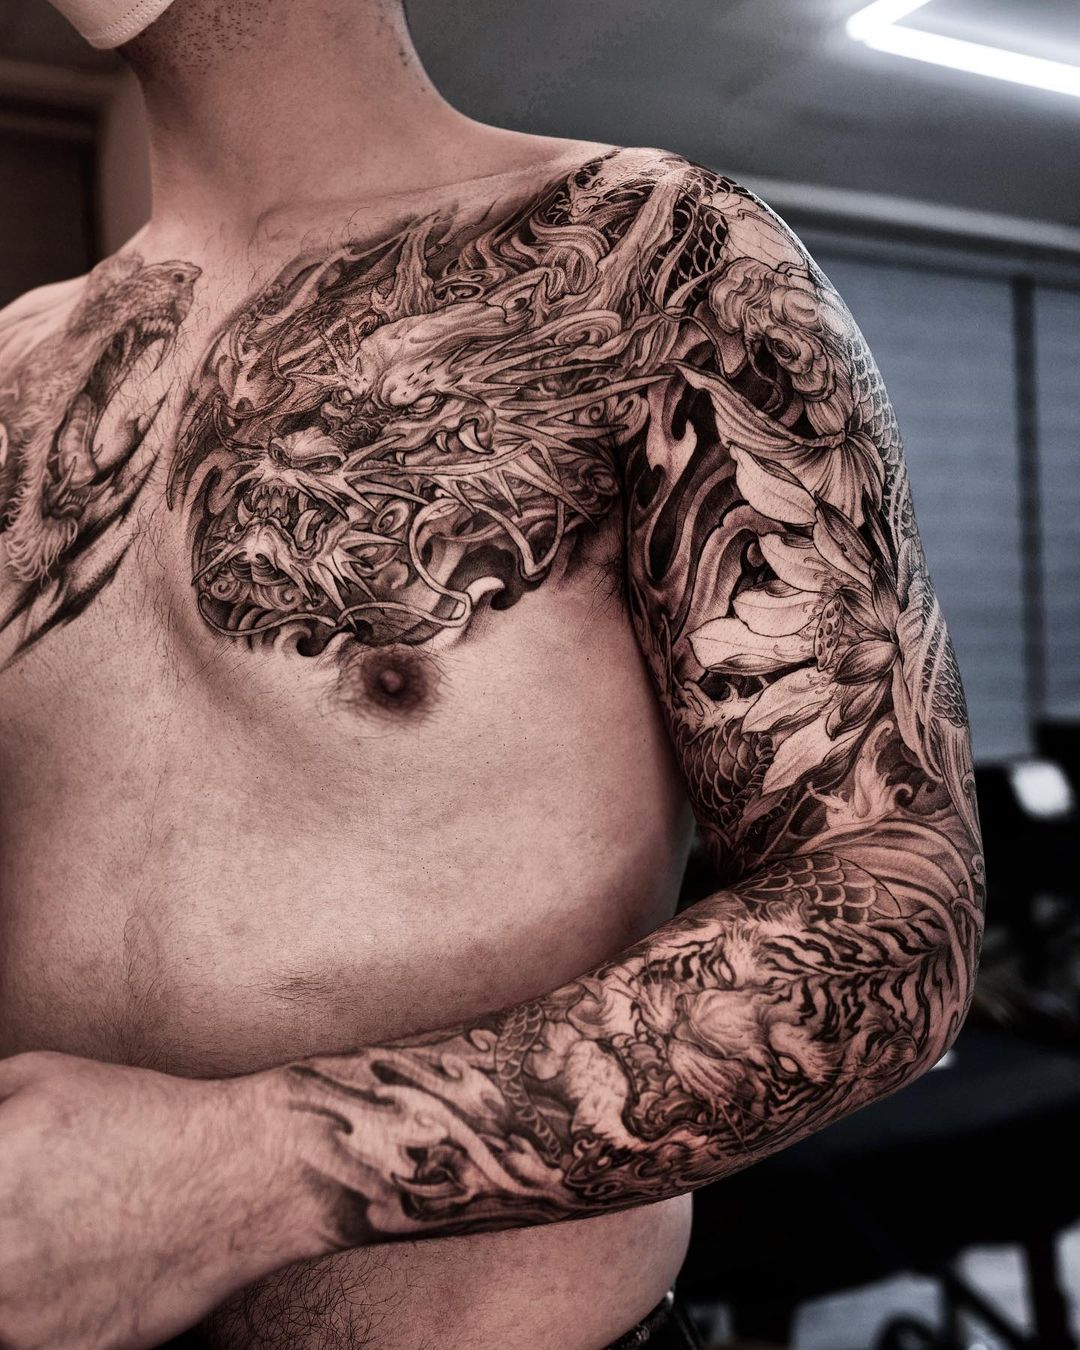 Shoulder dragon tattoo by zo gang tattoo